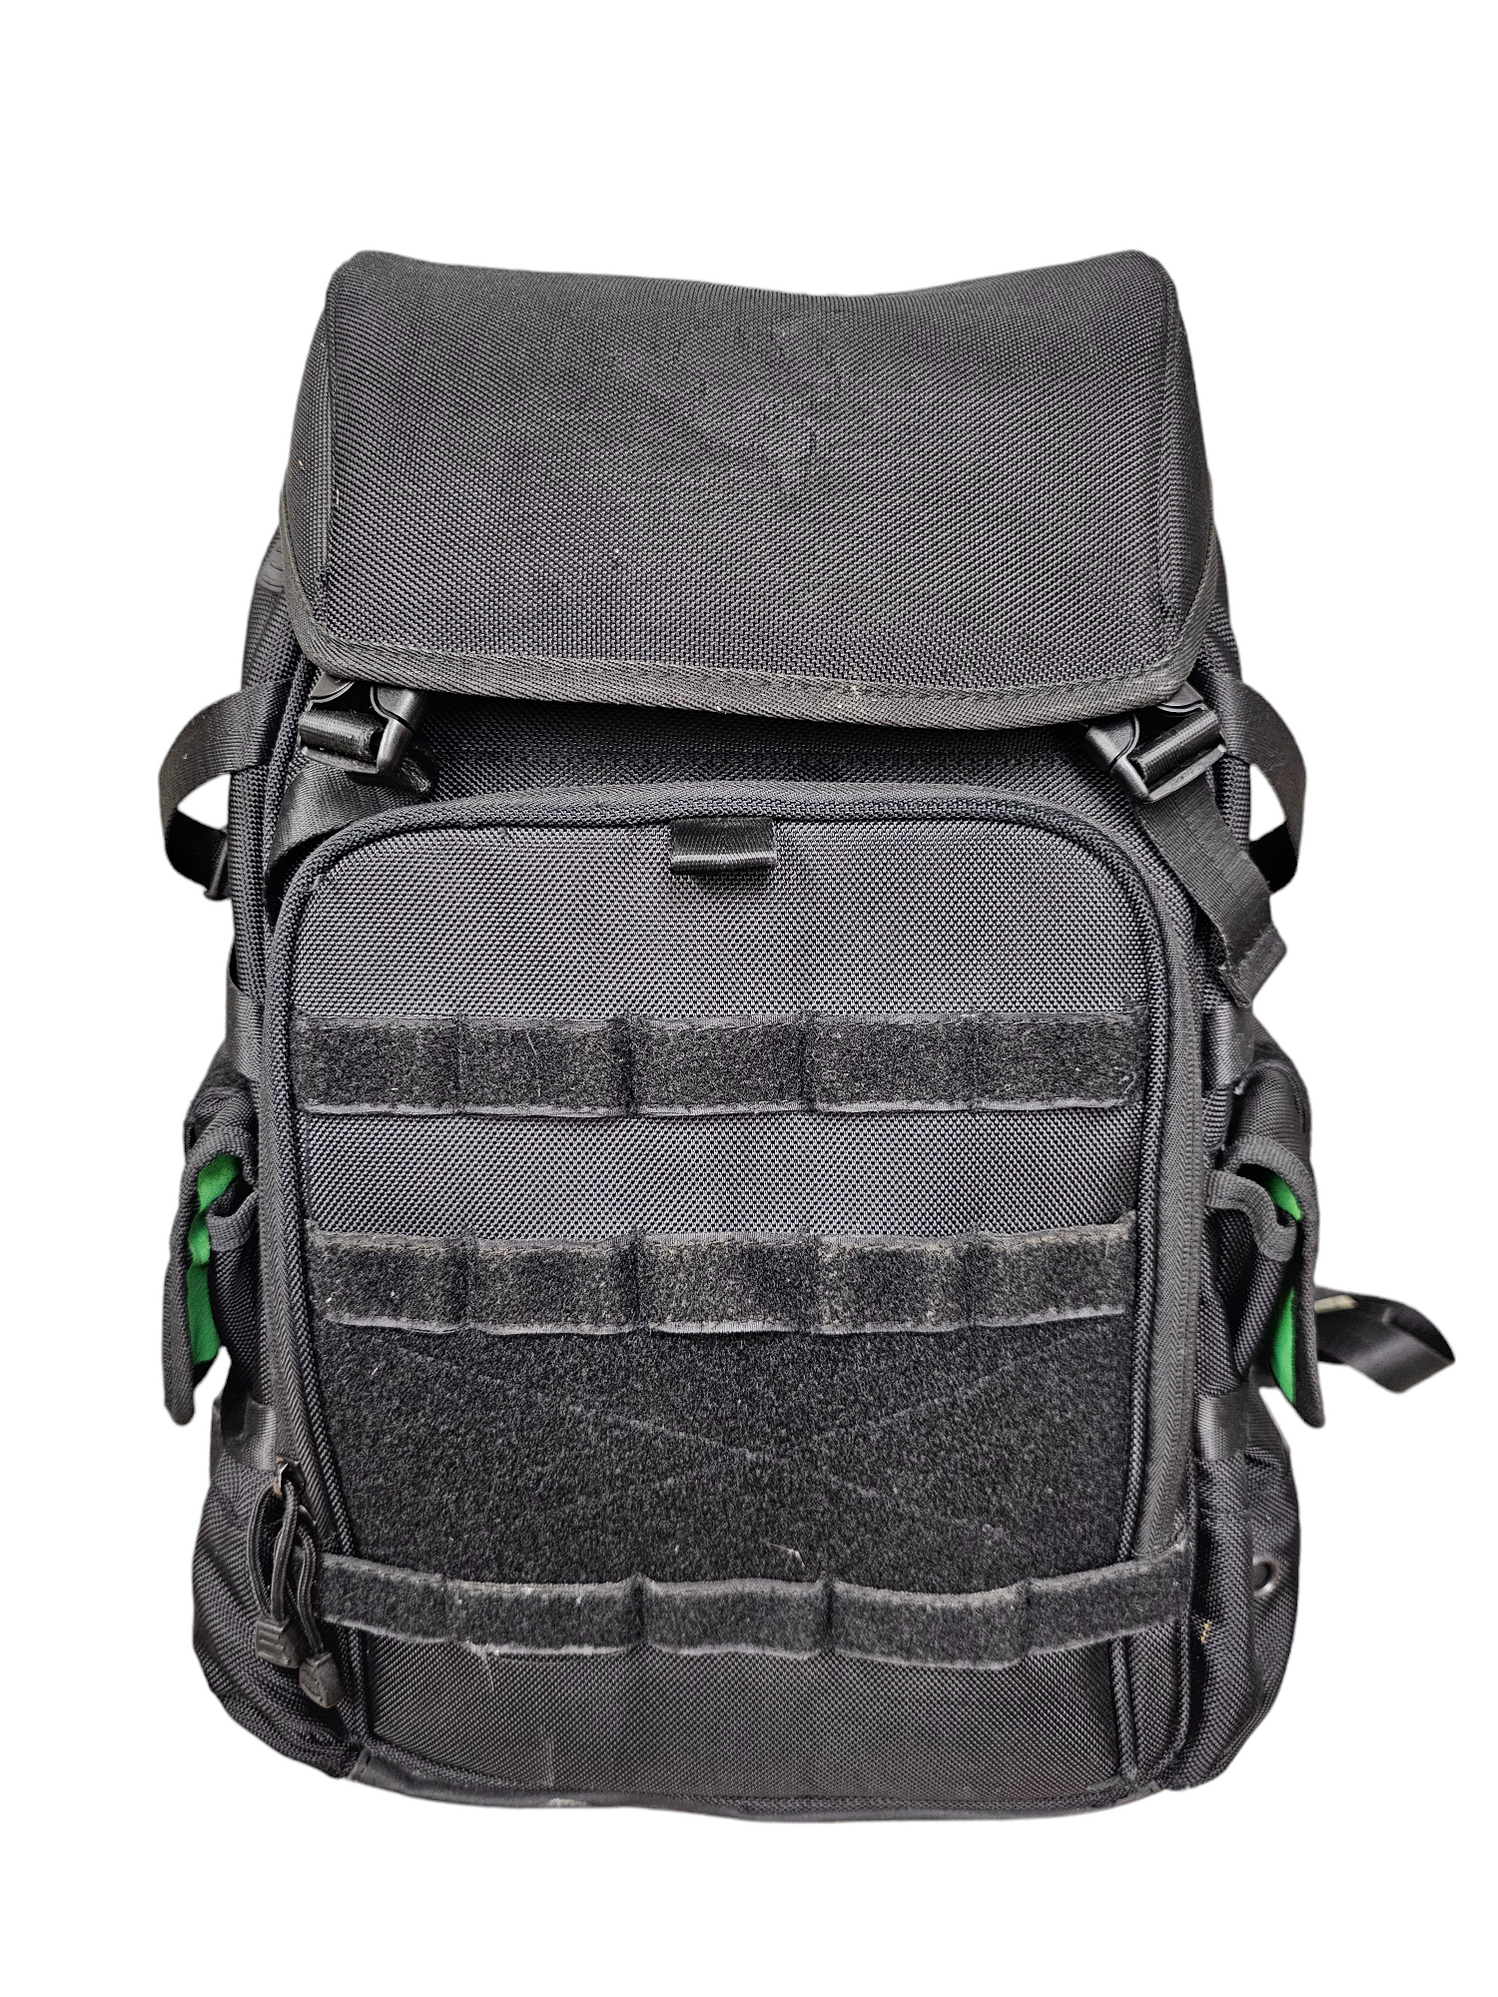 Razer Mobile Edge Razer Tactical Pro 17 Gaming Backpack